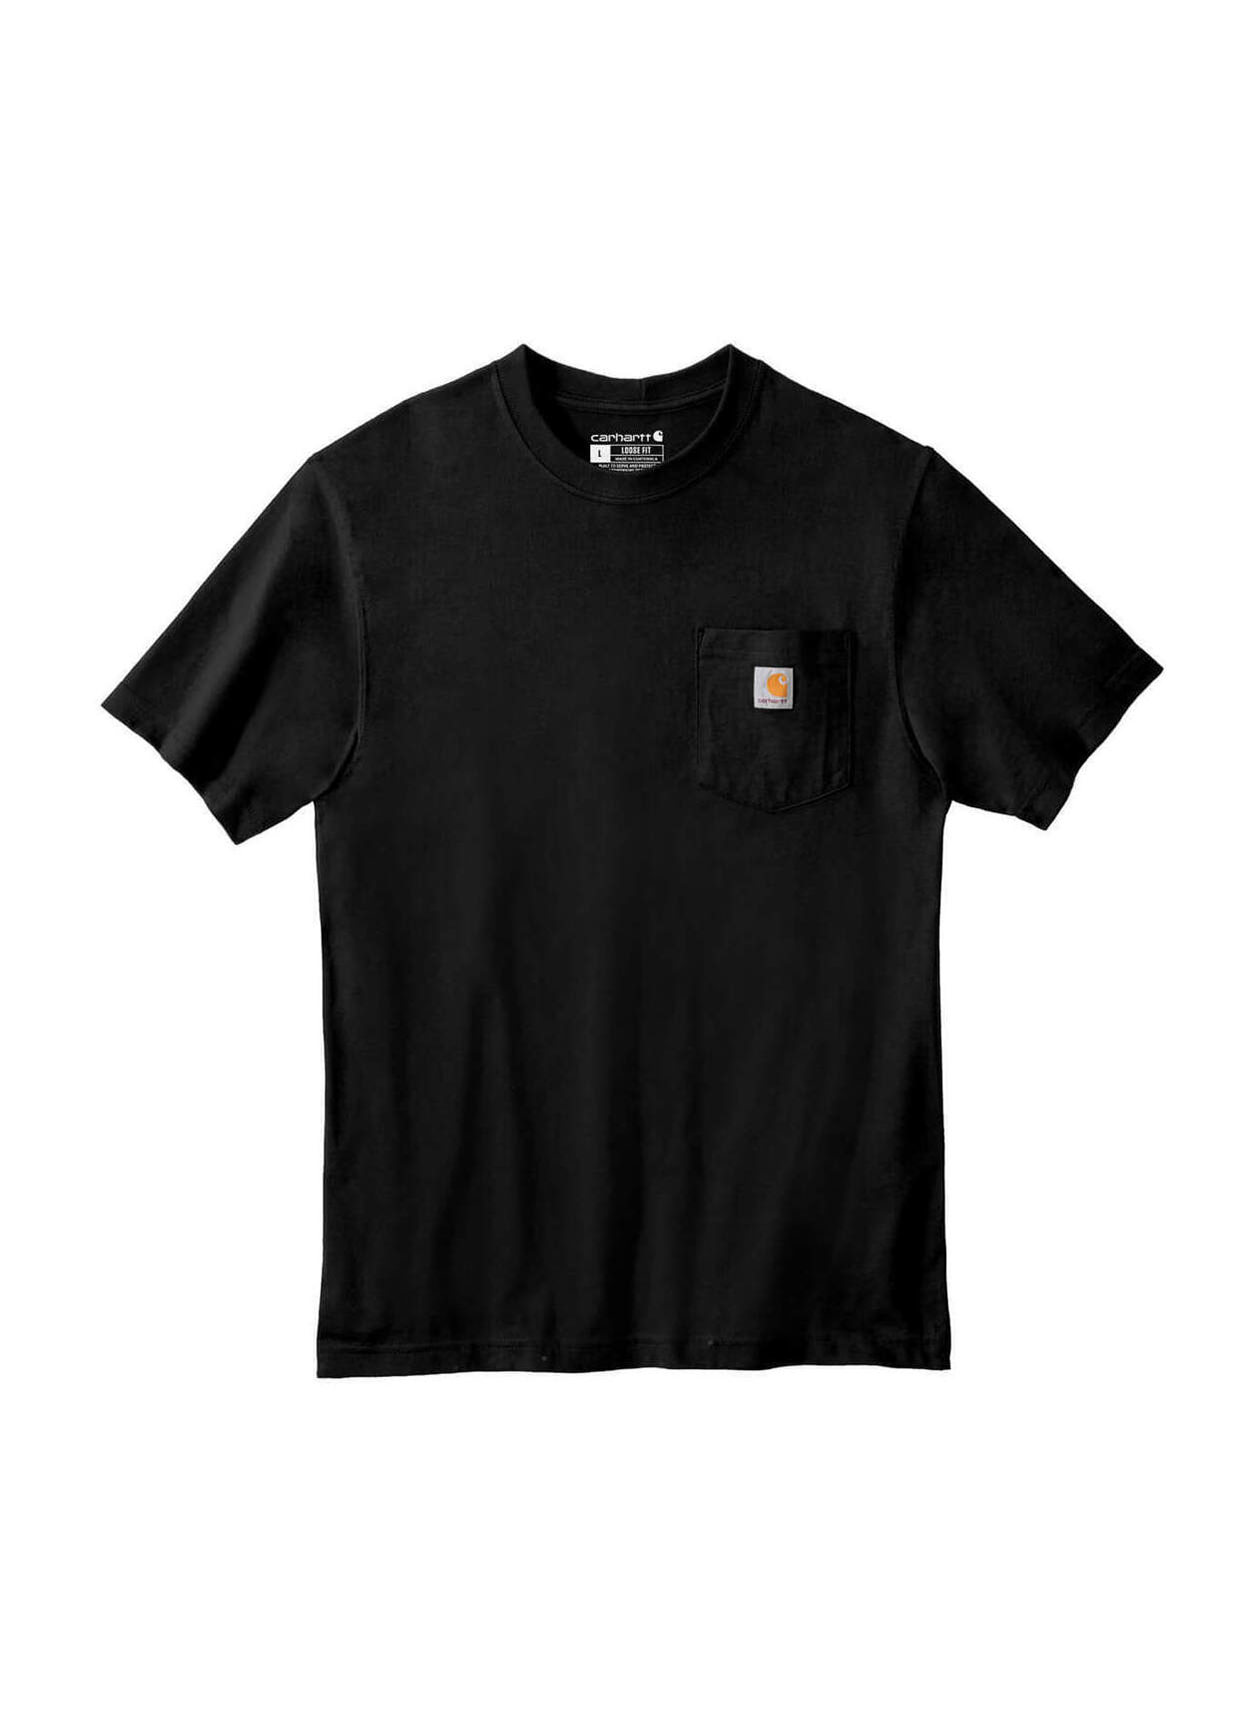 Carhartt Men's Black Workwear Pocket T-Shirt